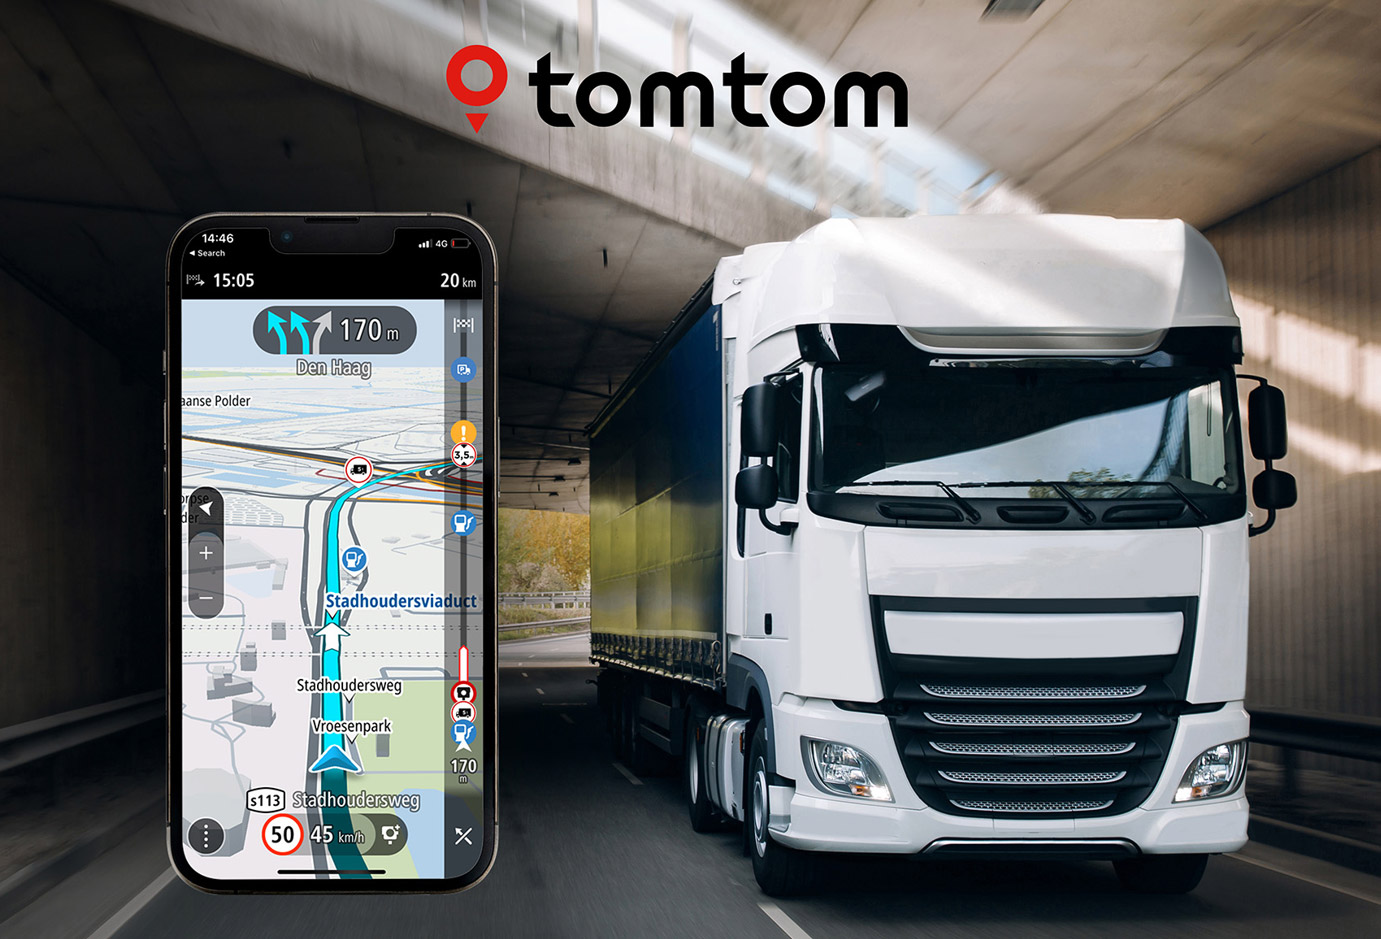 TomTom Go Expert Plus EU 7'' LKW/Trucker Navi - Navigationssystem -  Bluetooth